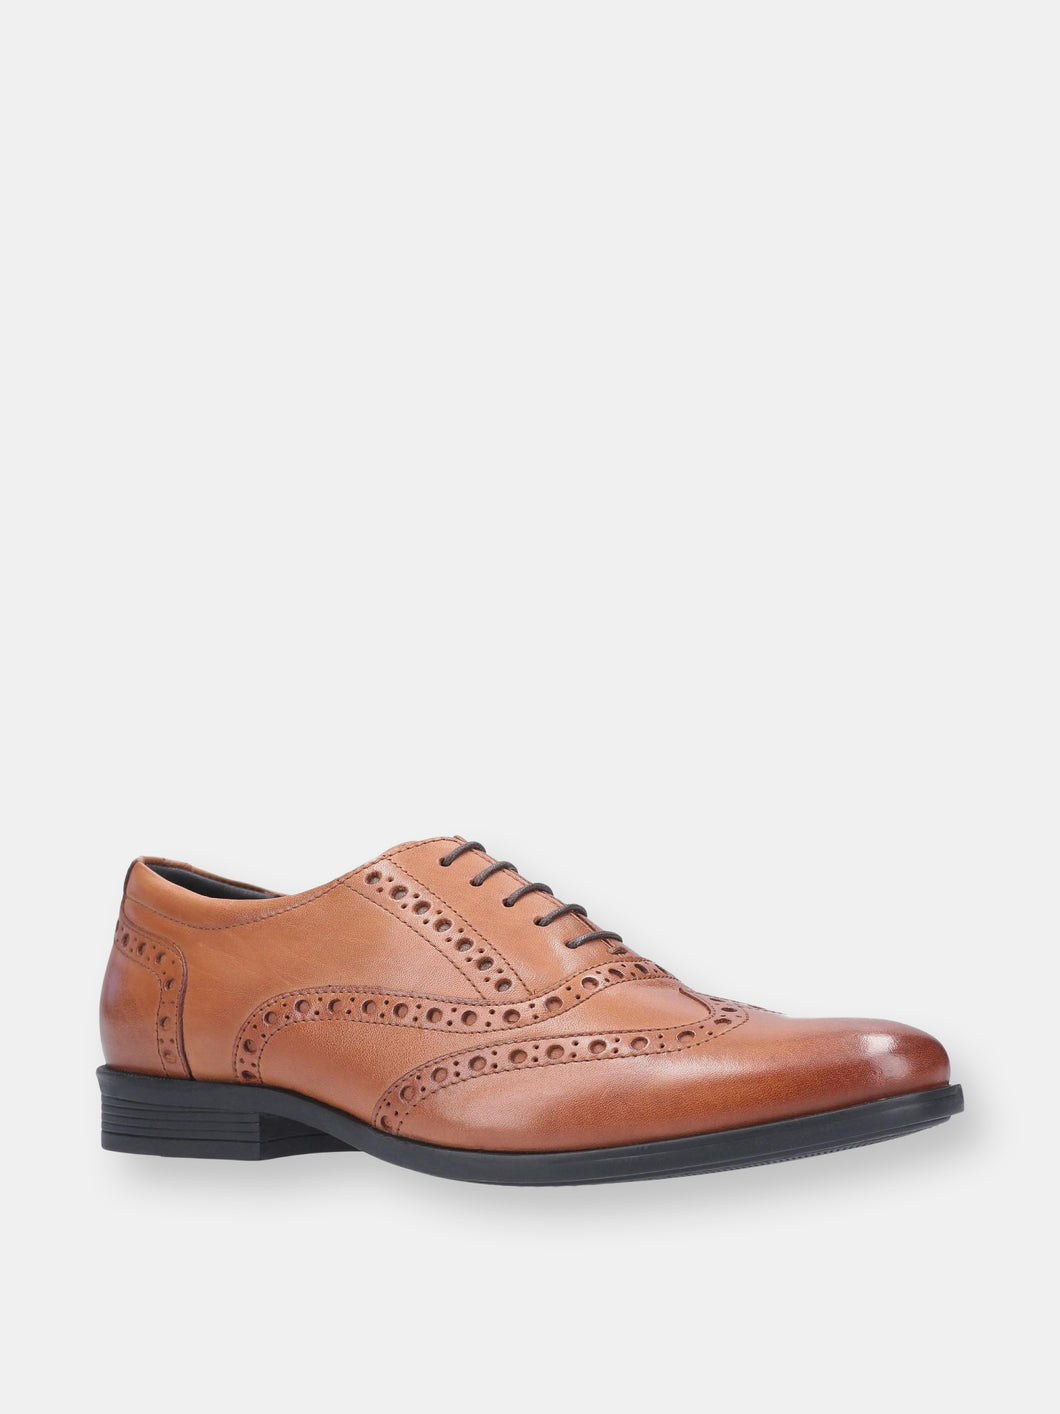 Mens Oaken Brogue Leather Shoe - Brown